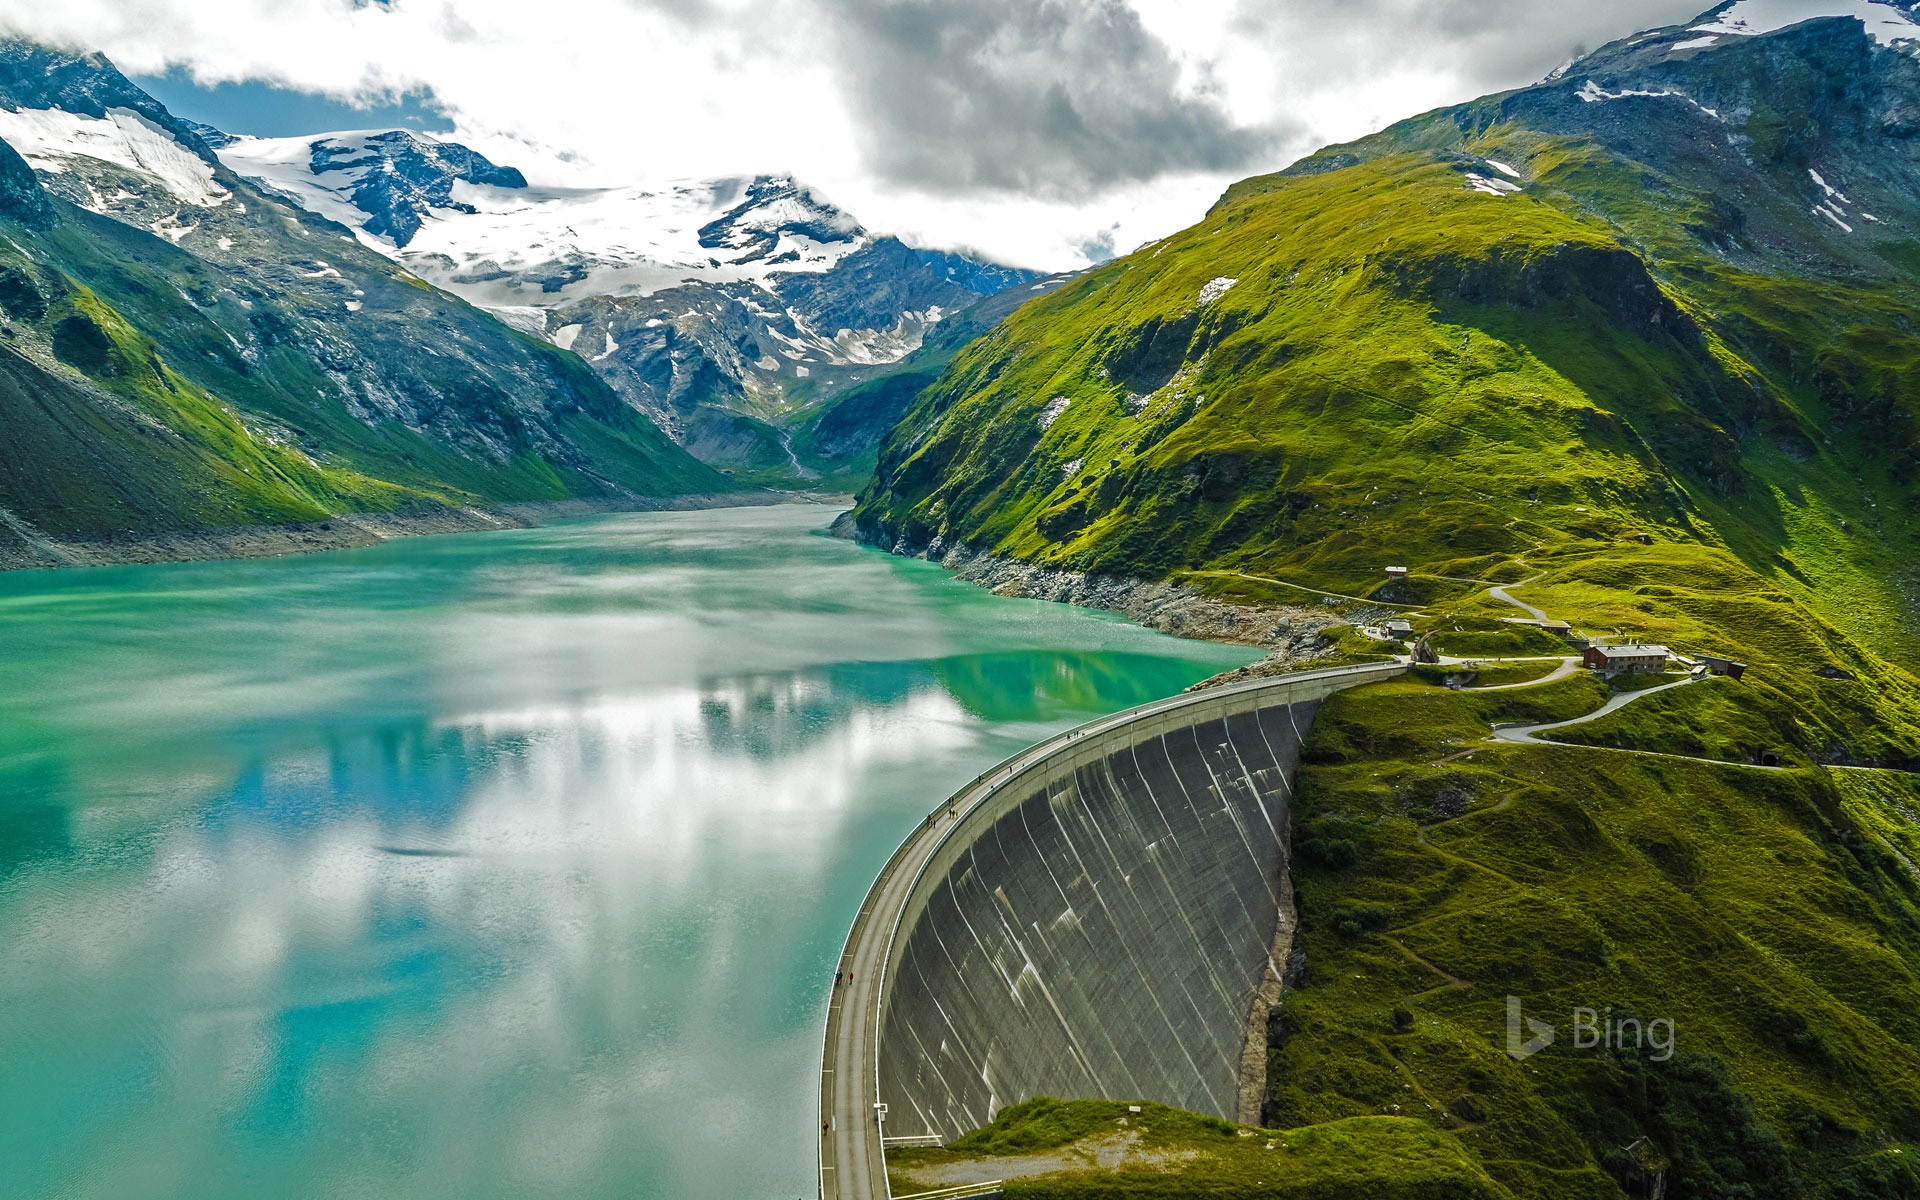 wallpaper terbaik,natural landscape,nature,water resources,mountainous landforms,fjord